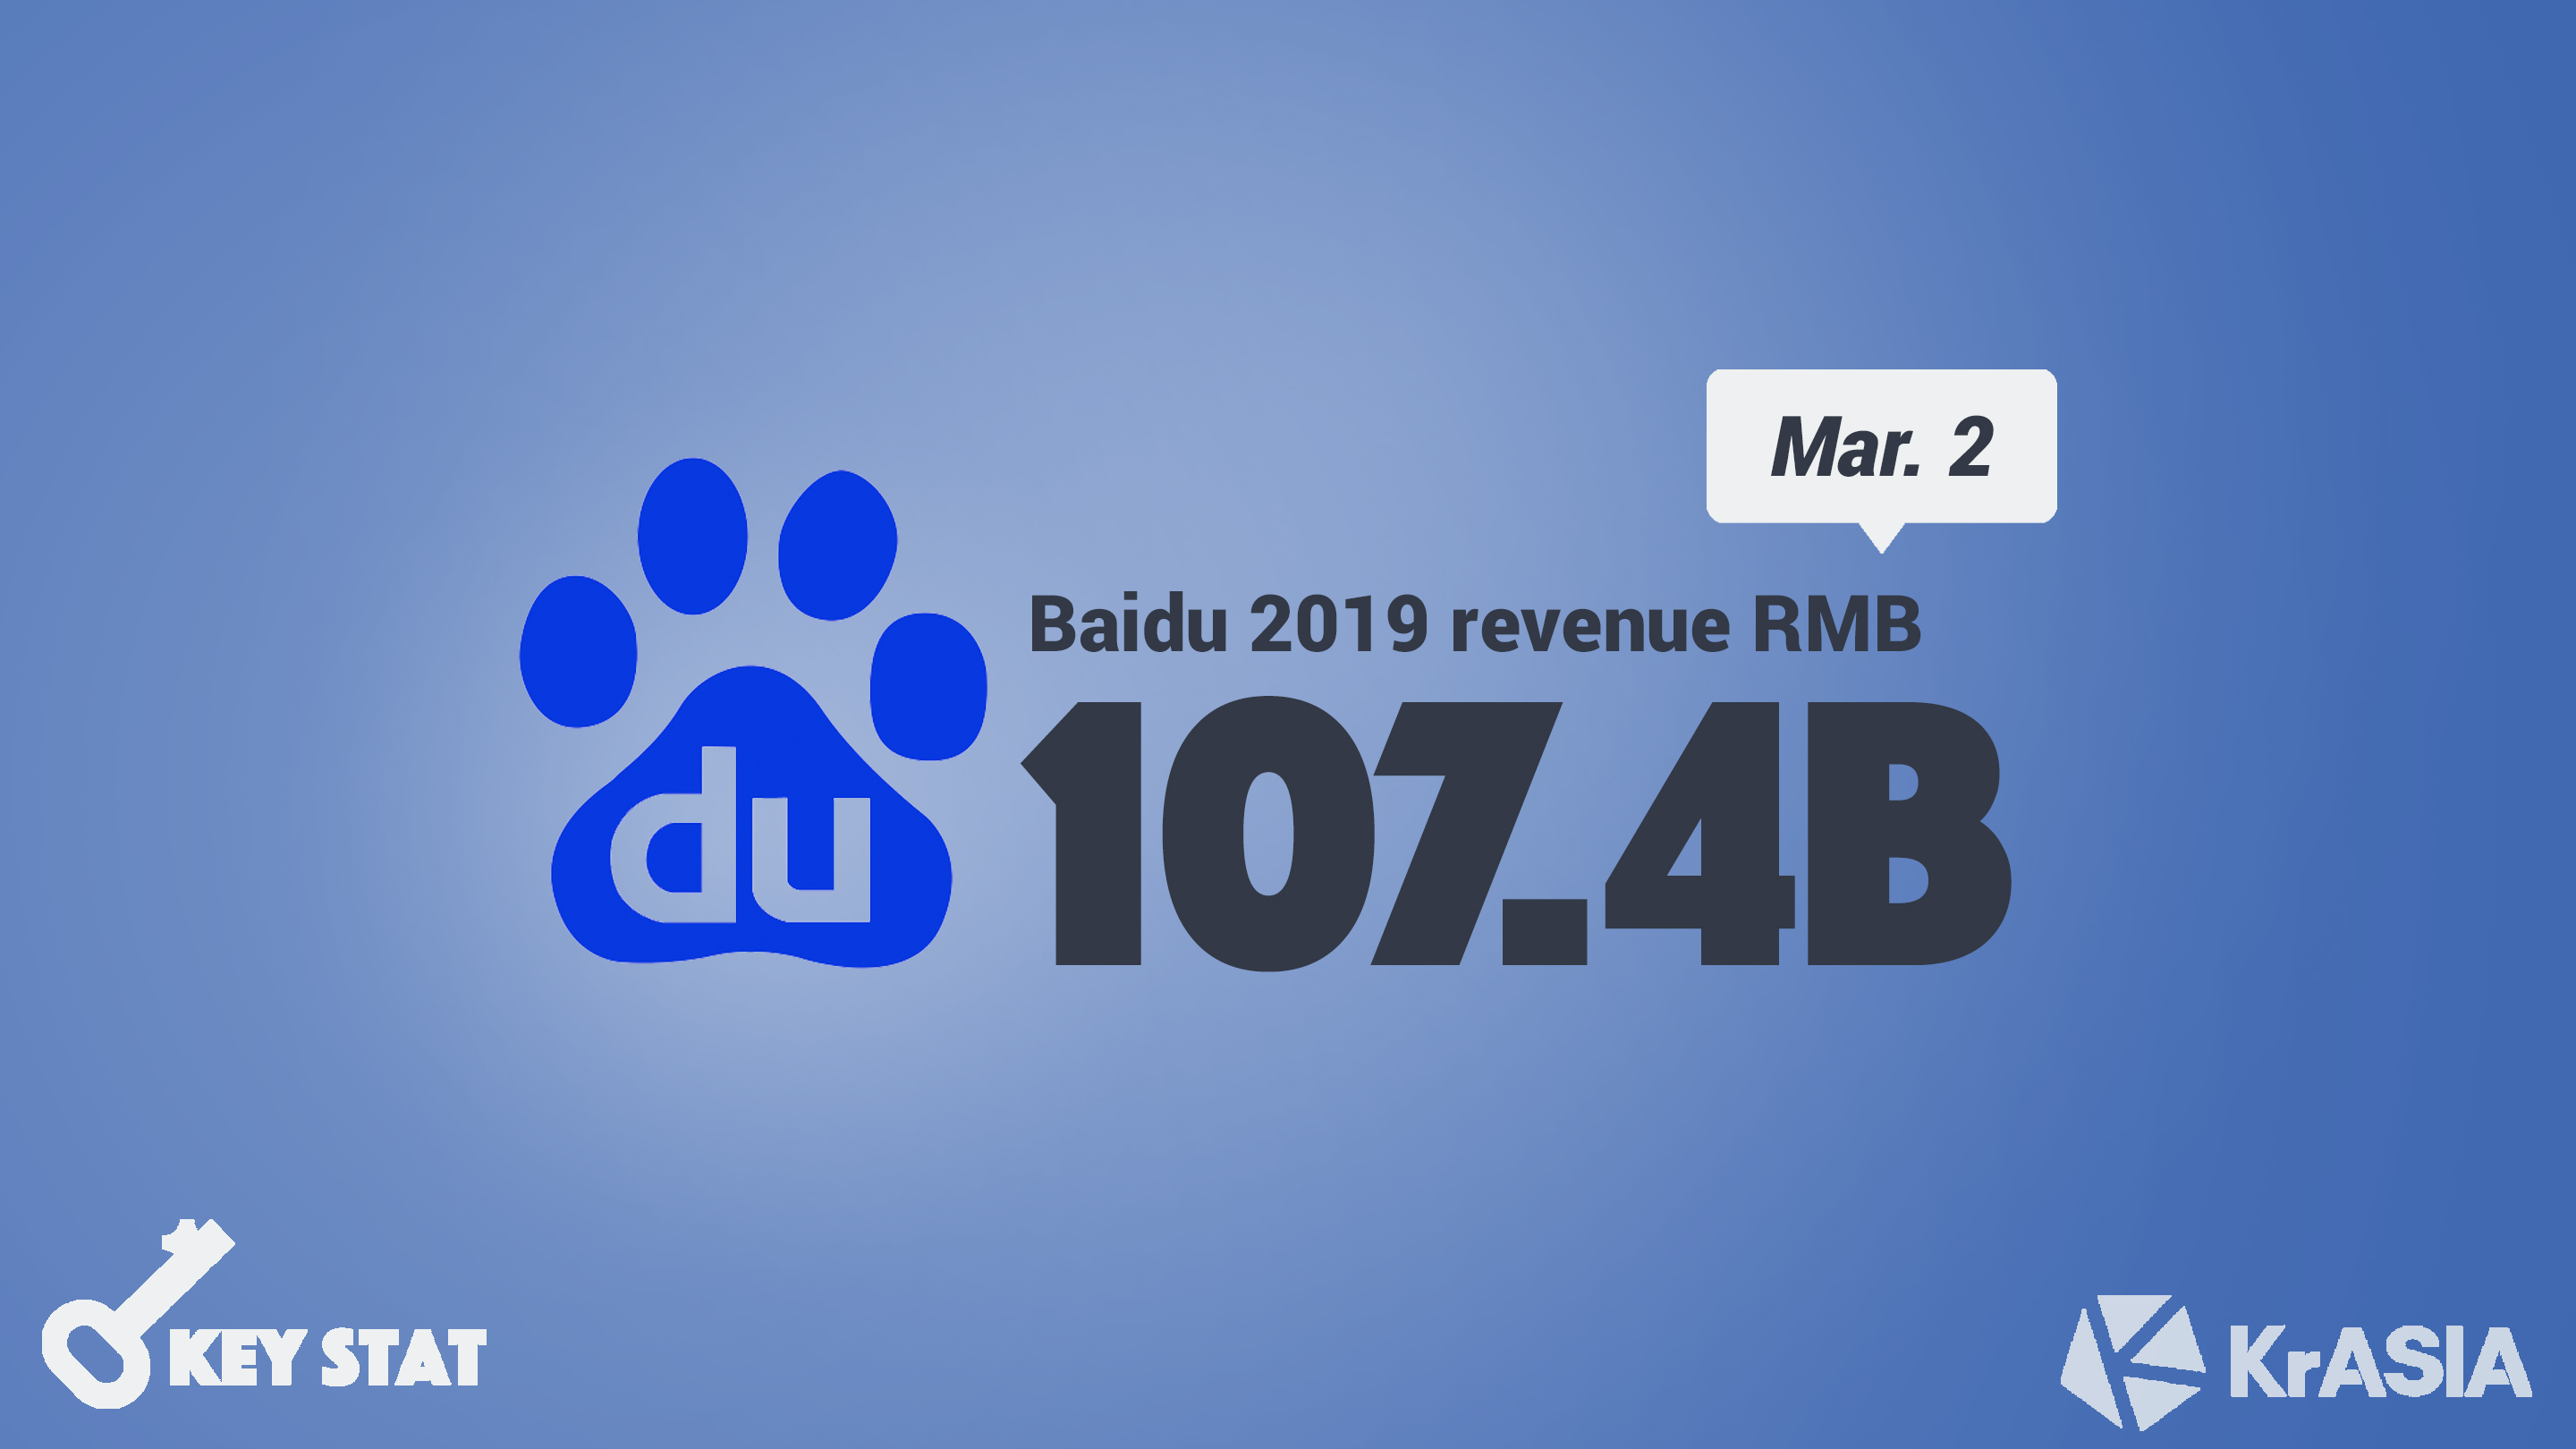 KEY STAT | Baidu warns of weak Q1 2020 prospects after Q4 profits rebound